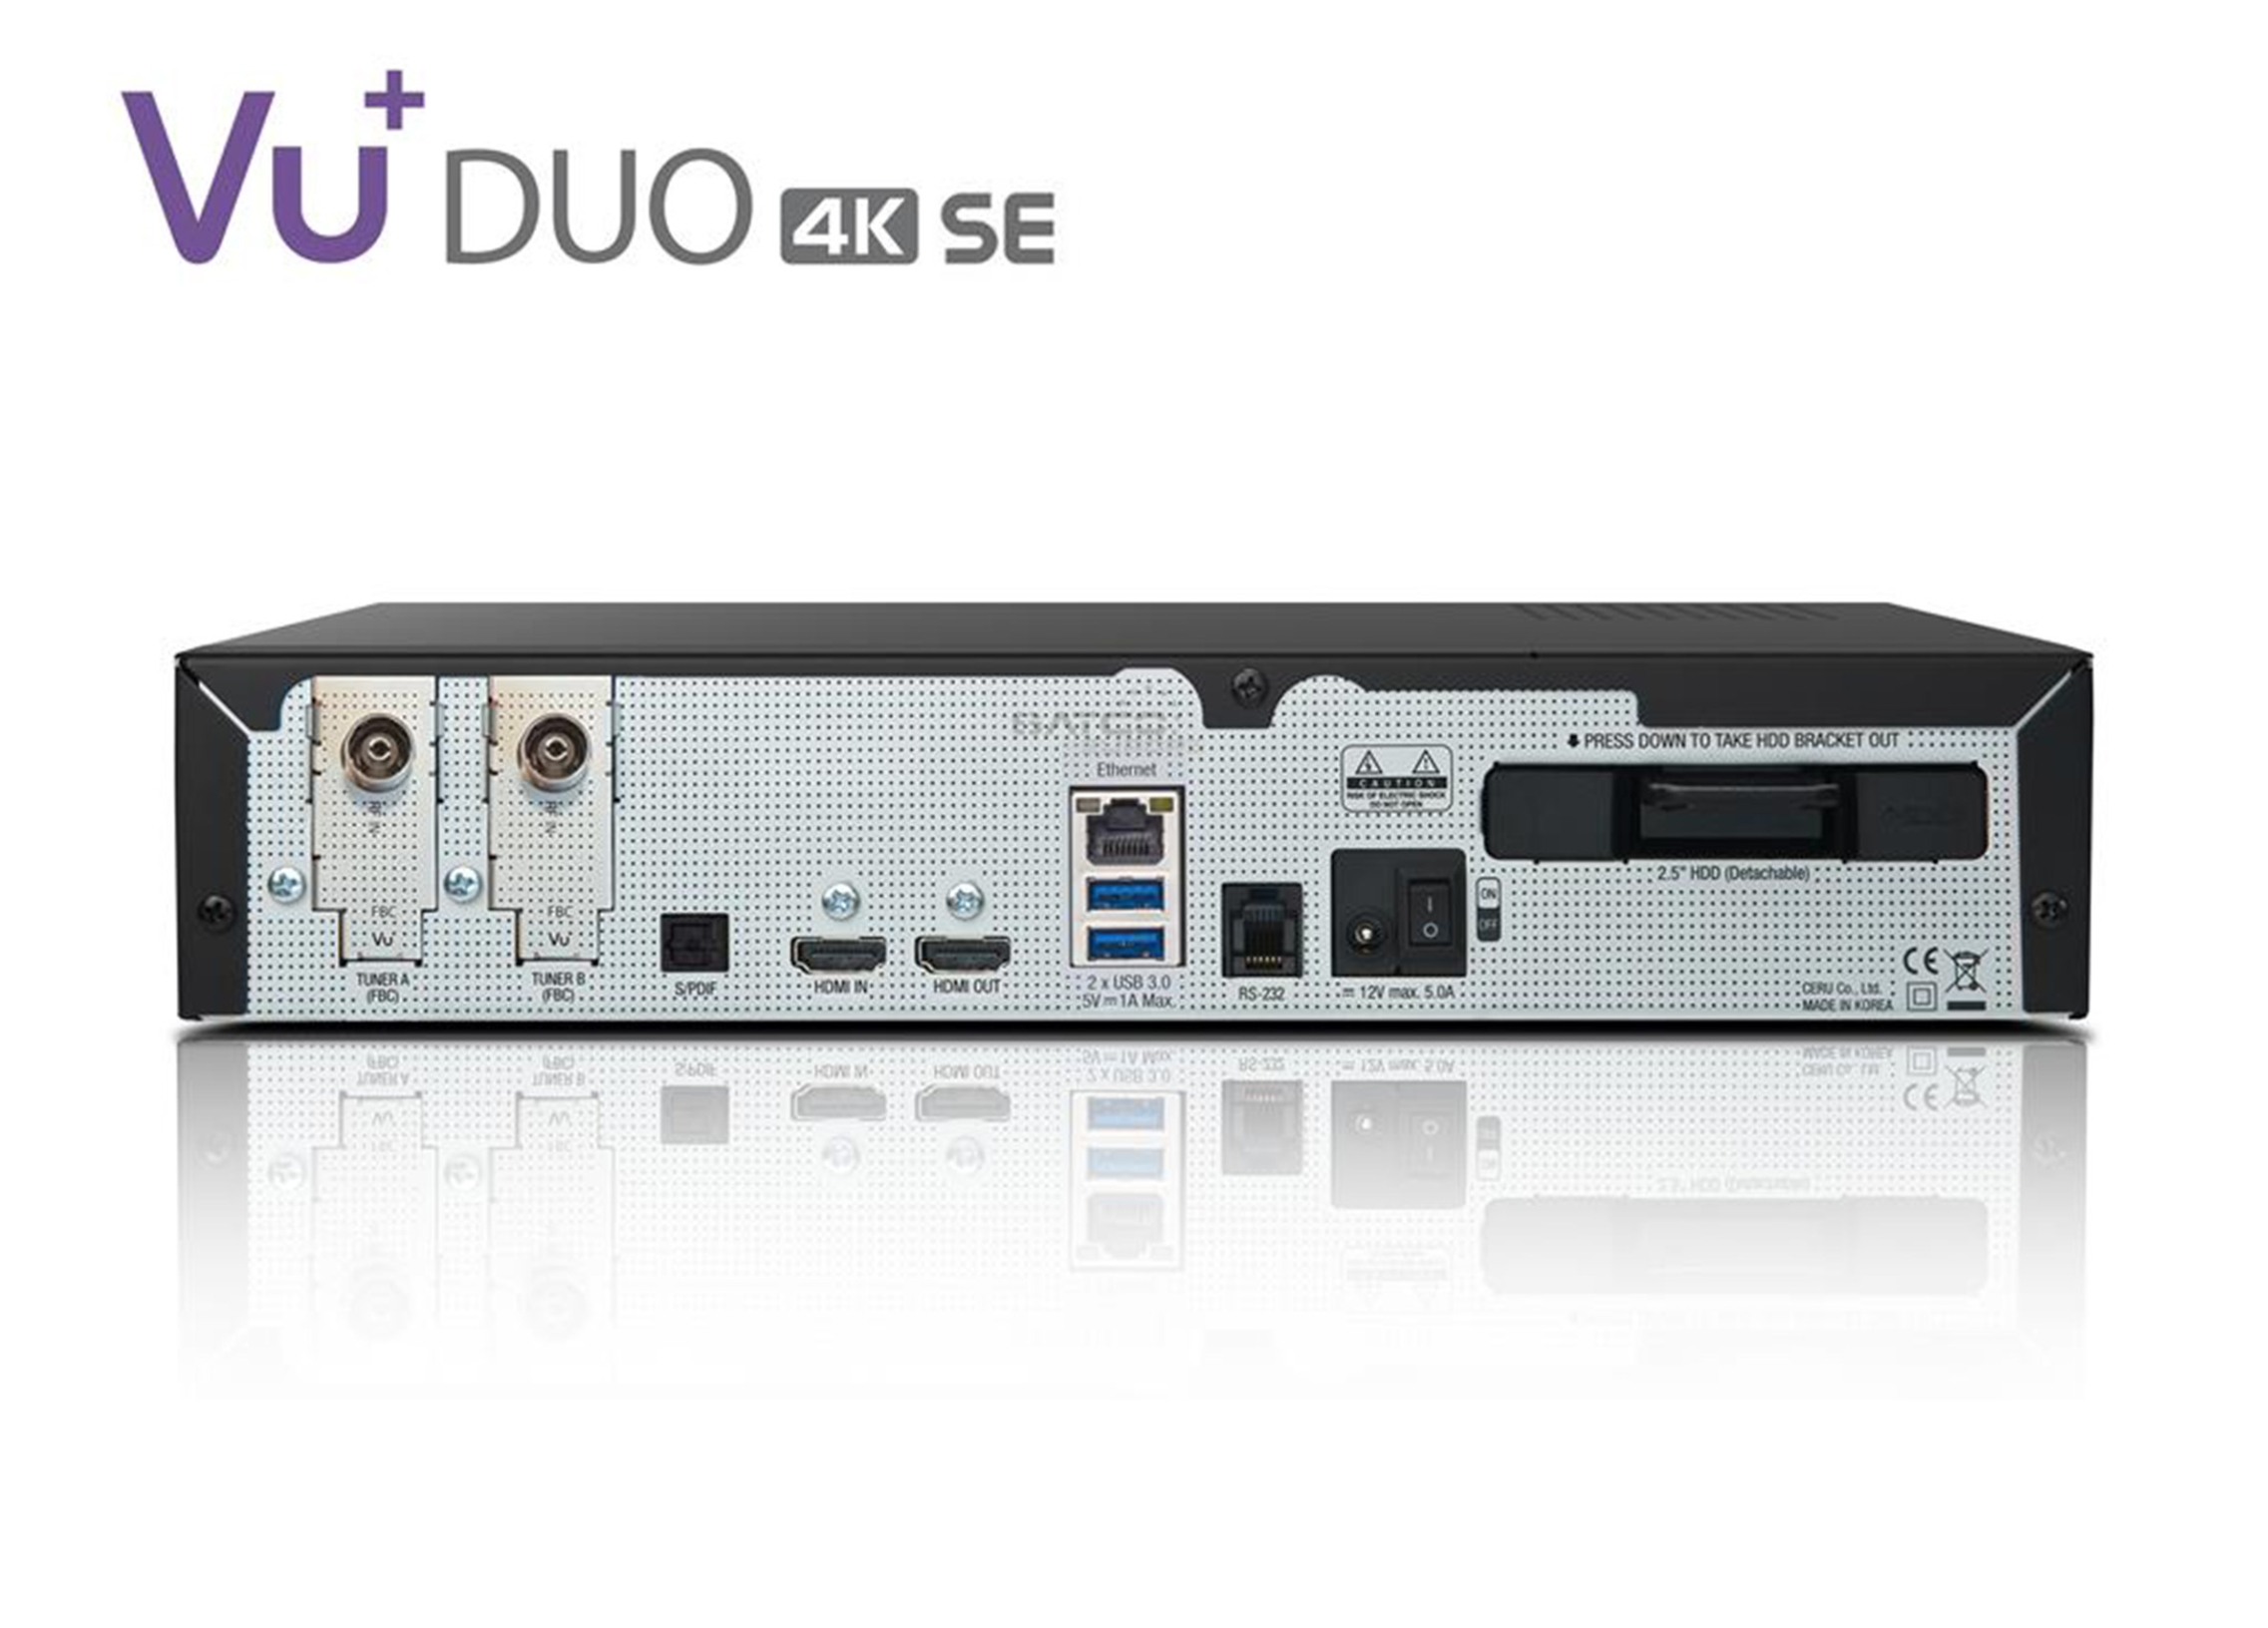 VU+ Duo 4K SE BT 2x DVB-T2 Dual Linux Receiver